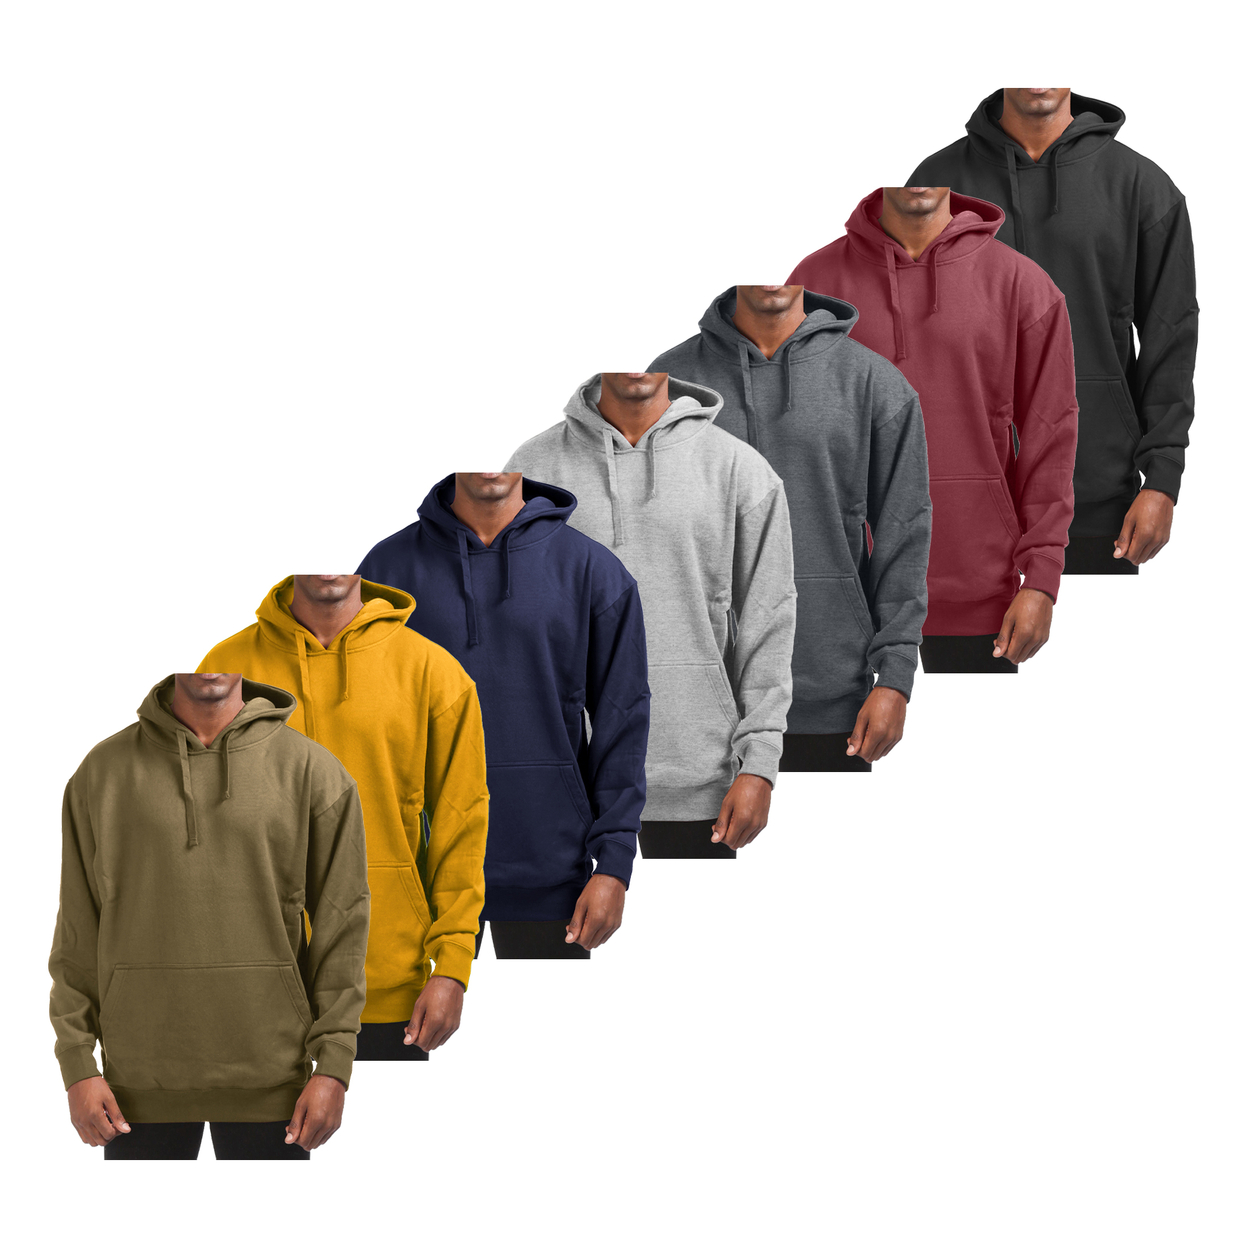 2-Pack: Men's Super-Soft Winter Warm Cotton-Blend Fleece Pullover Hoodie With Kangaroo Pocket - Black & Grey, 3x-large